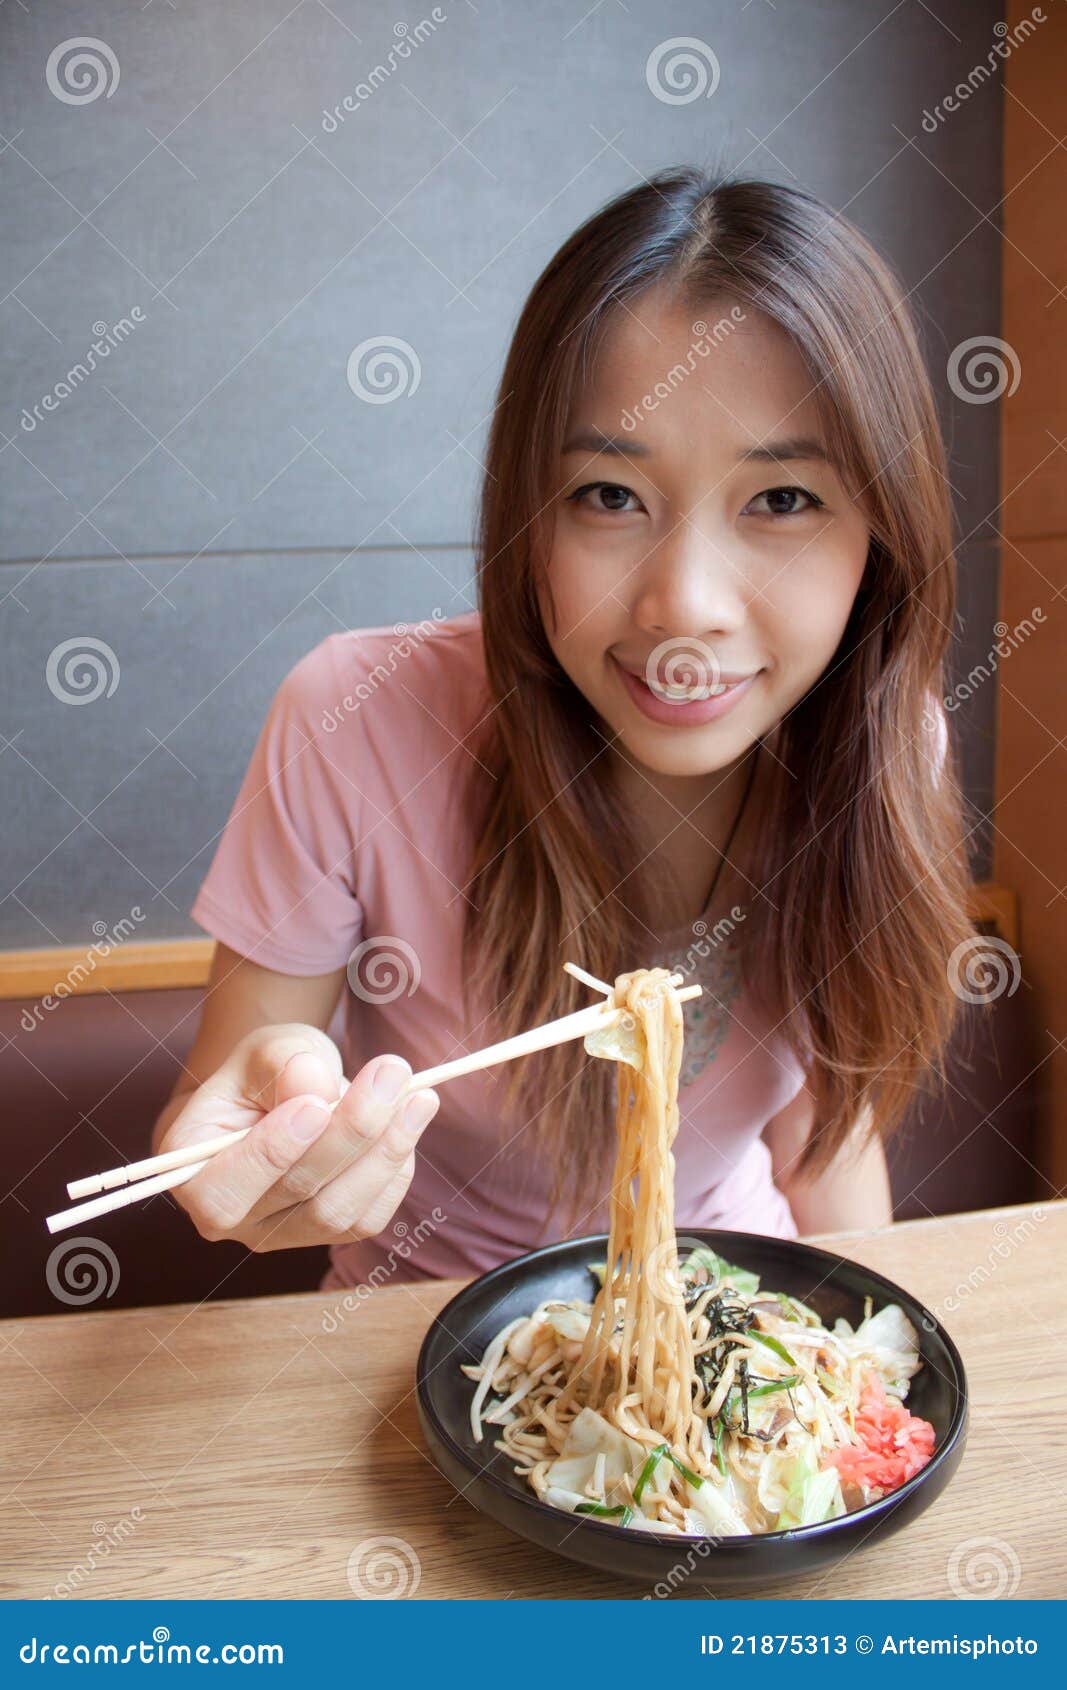 Как едят лапшу палочками. Человек ест лапшу палочками. Девушка ест лапшу палочками. Азиатская девочка ест лапшу. Китаец ест лапшу.